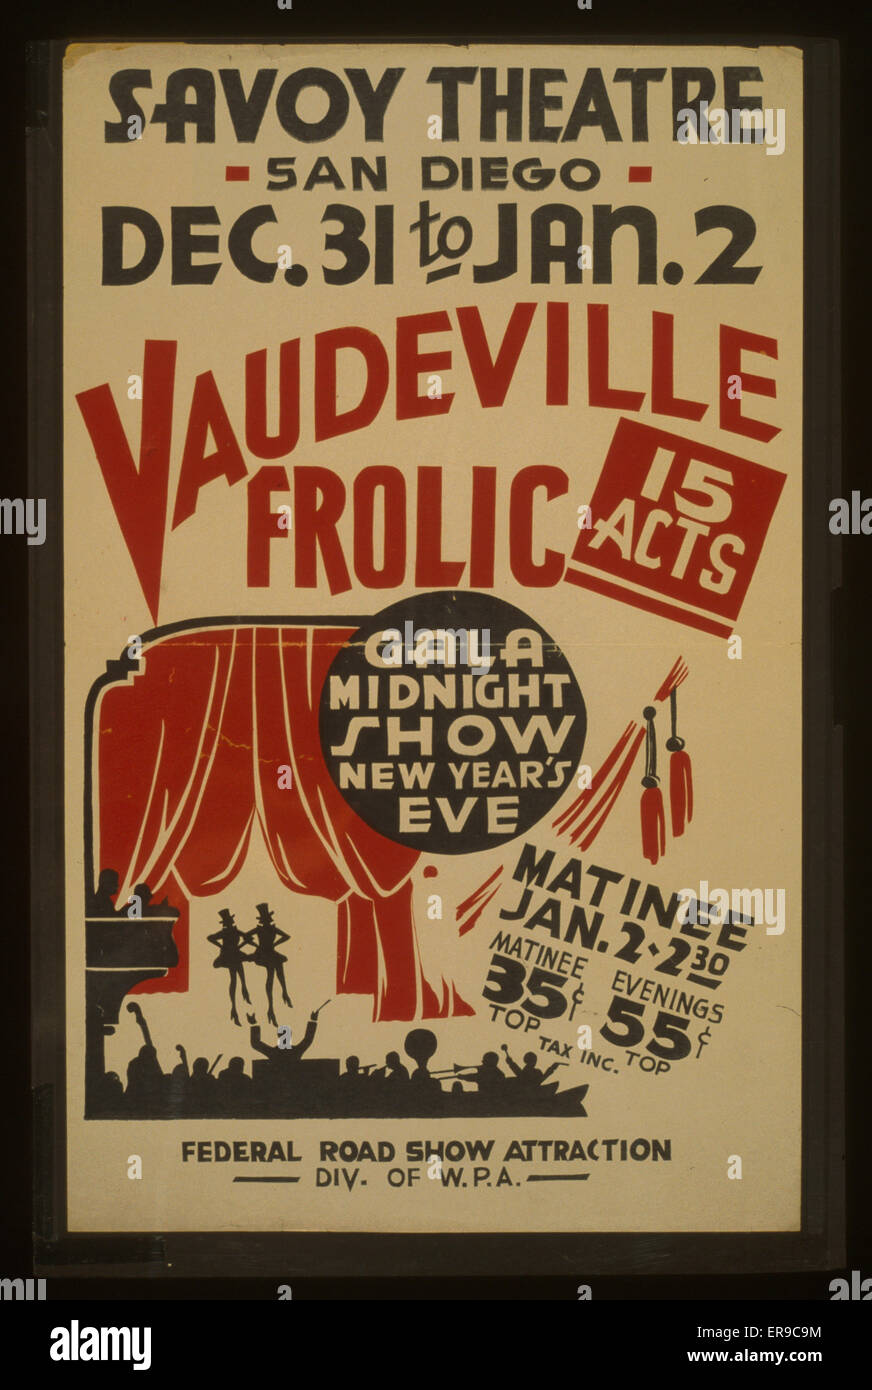 Vaudeville frolic Gala midnight show New Year's eve : 15 act Stock Photo